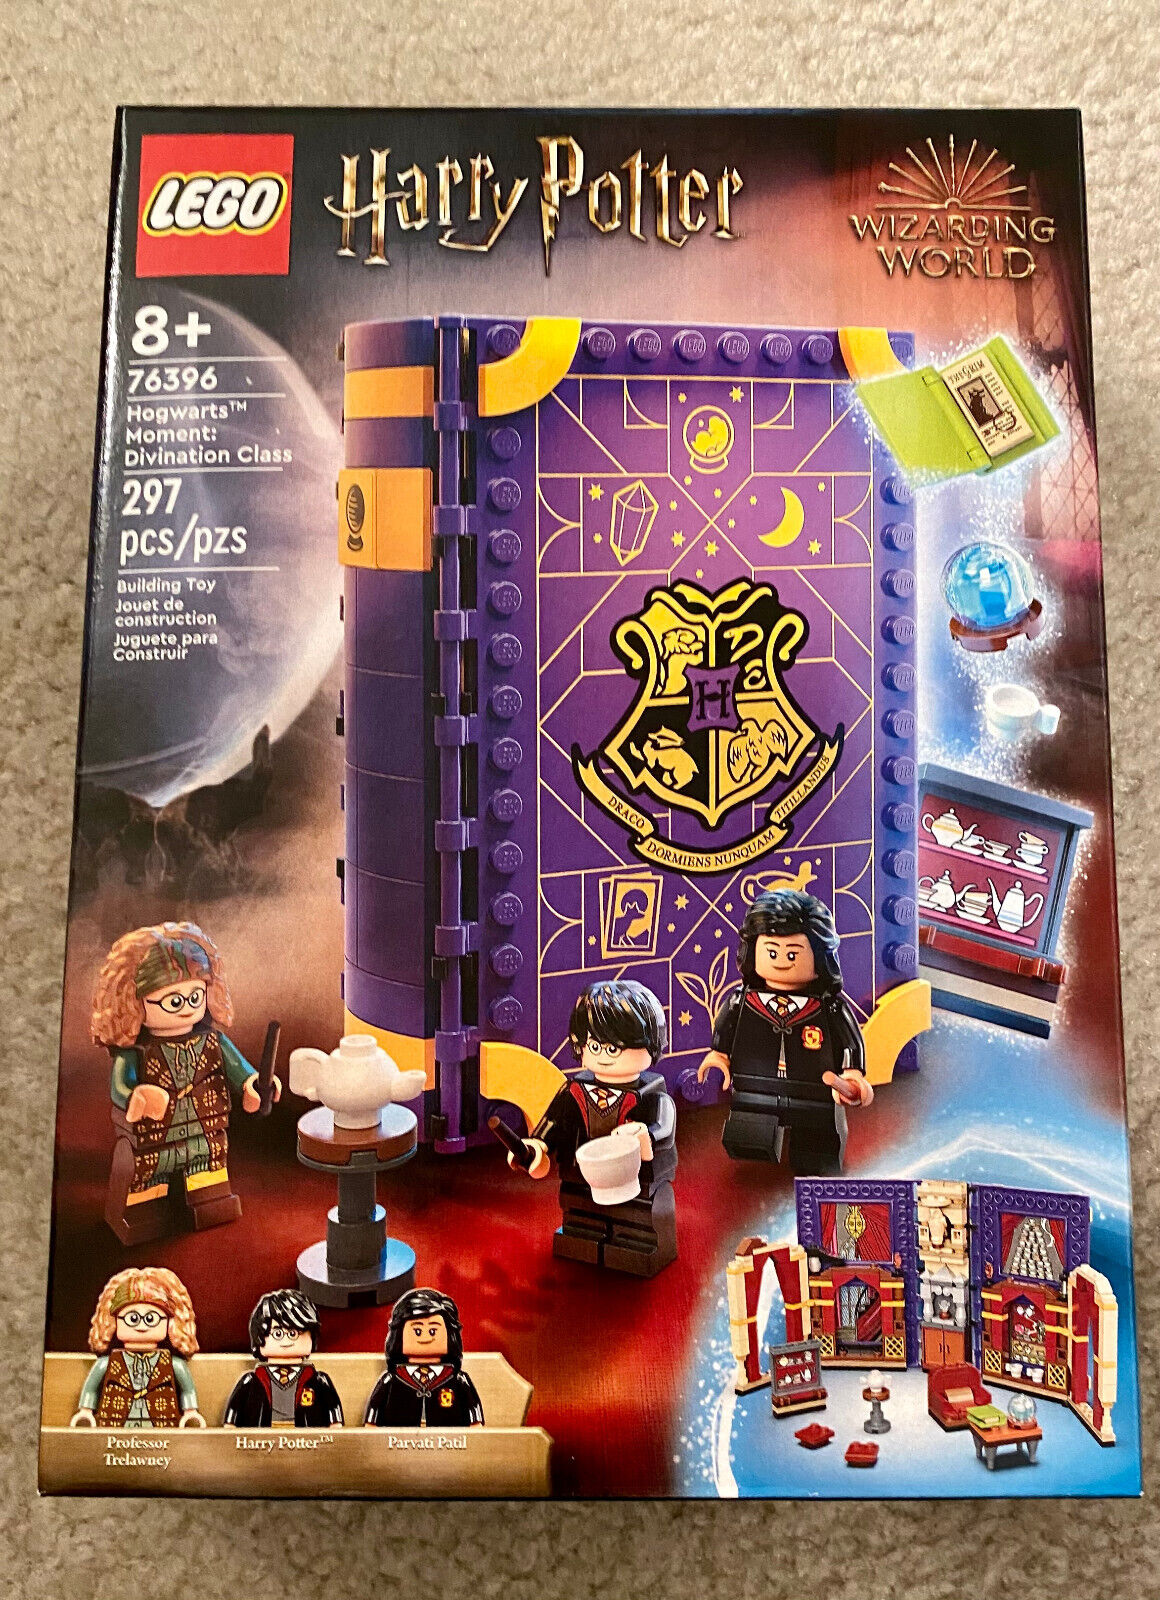 Lego 76393 Harry Potter Hogwarts Moment: Divination Class Retired New Sealed Set